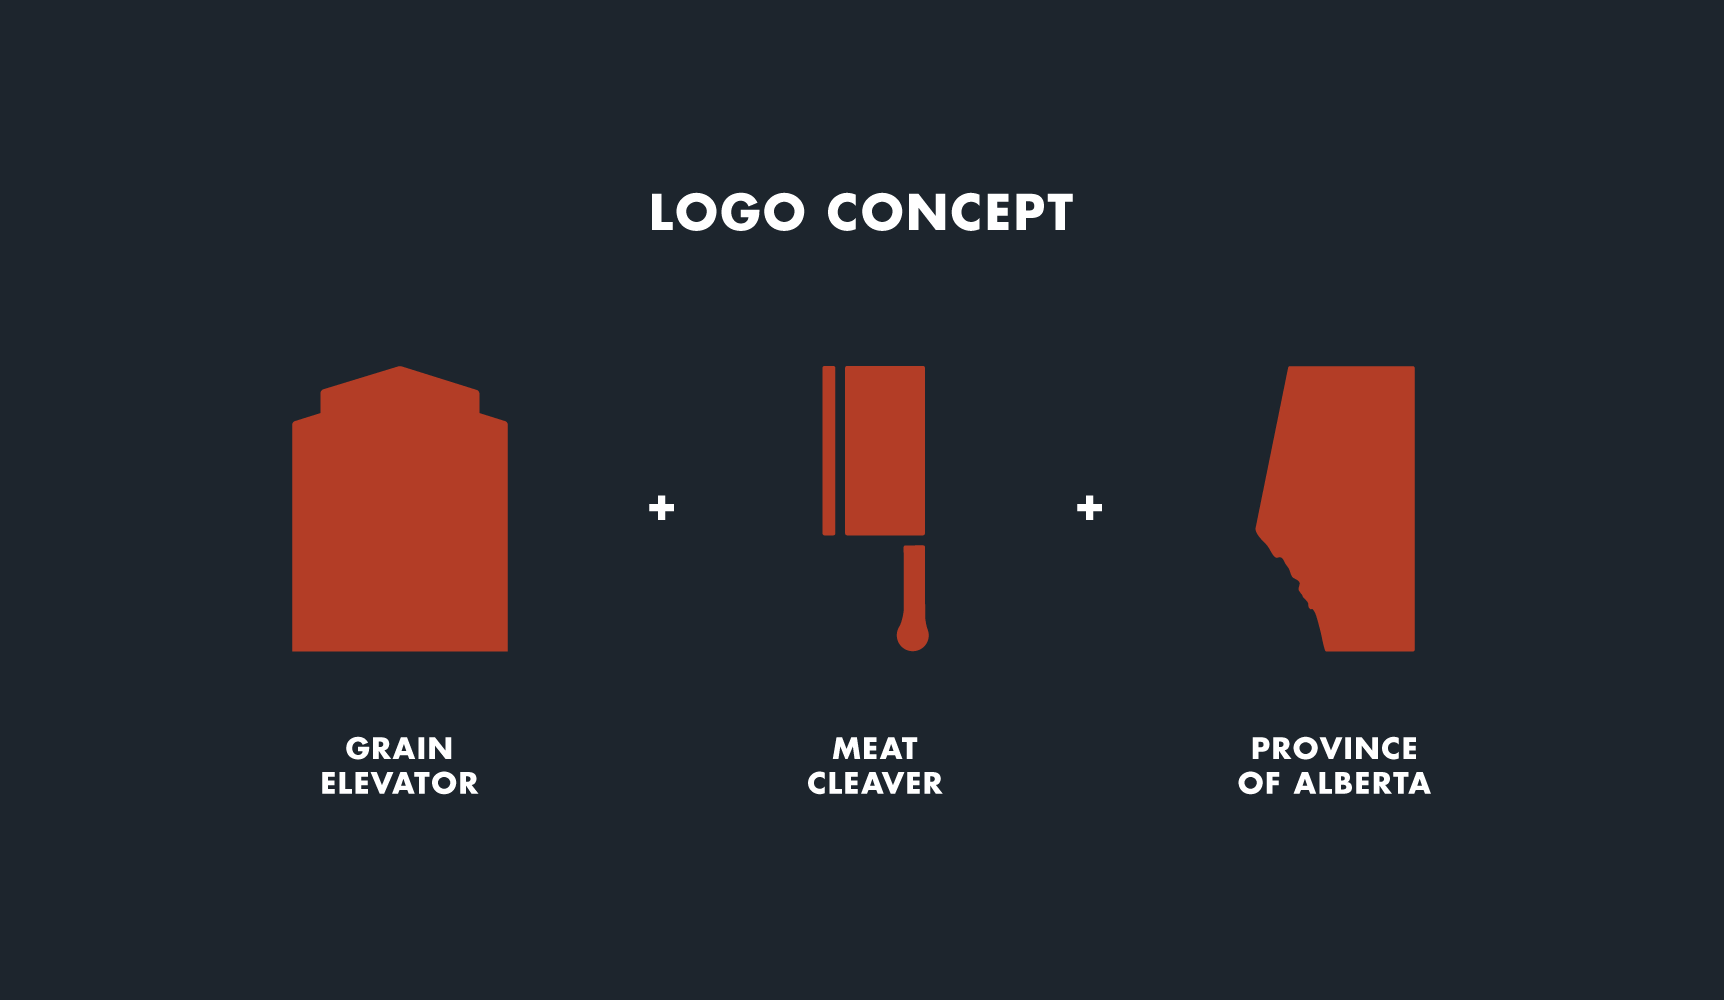 Premium Sausage logo concept: Grain Elevator + Meat Cleaver + Province of Alberta